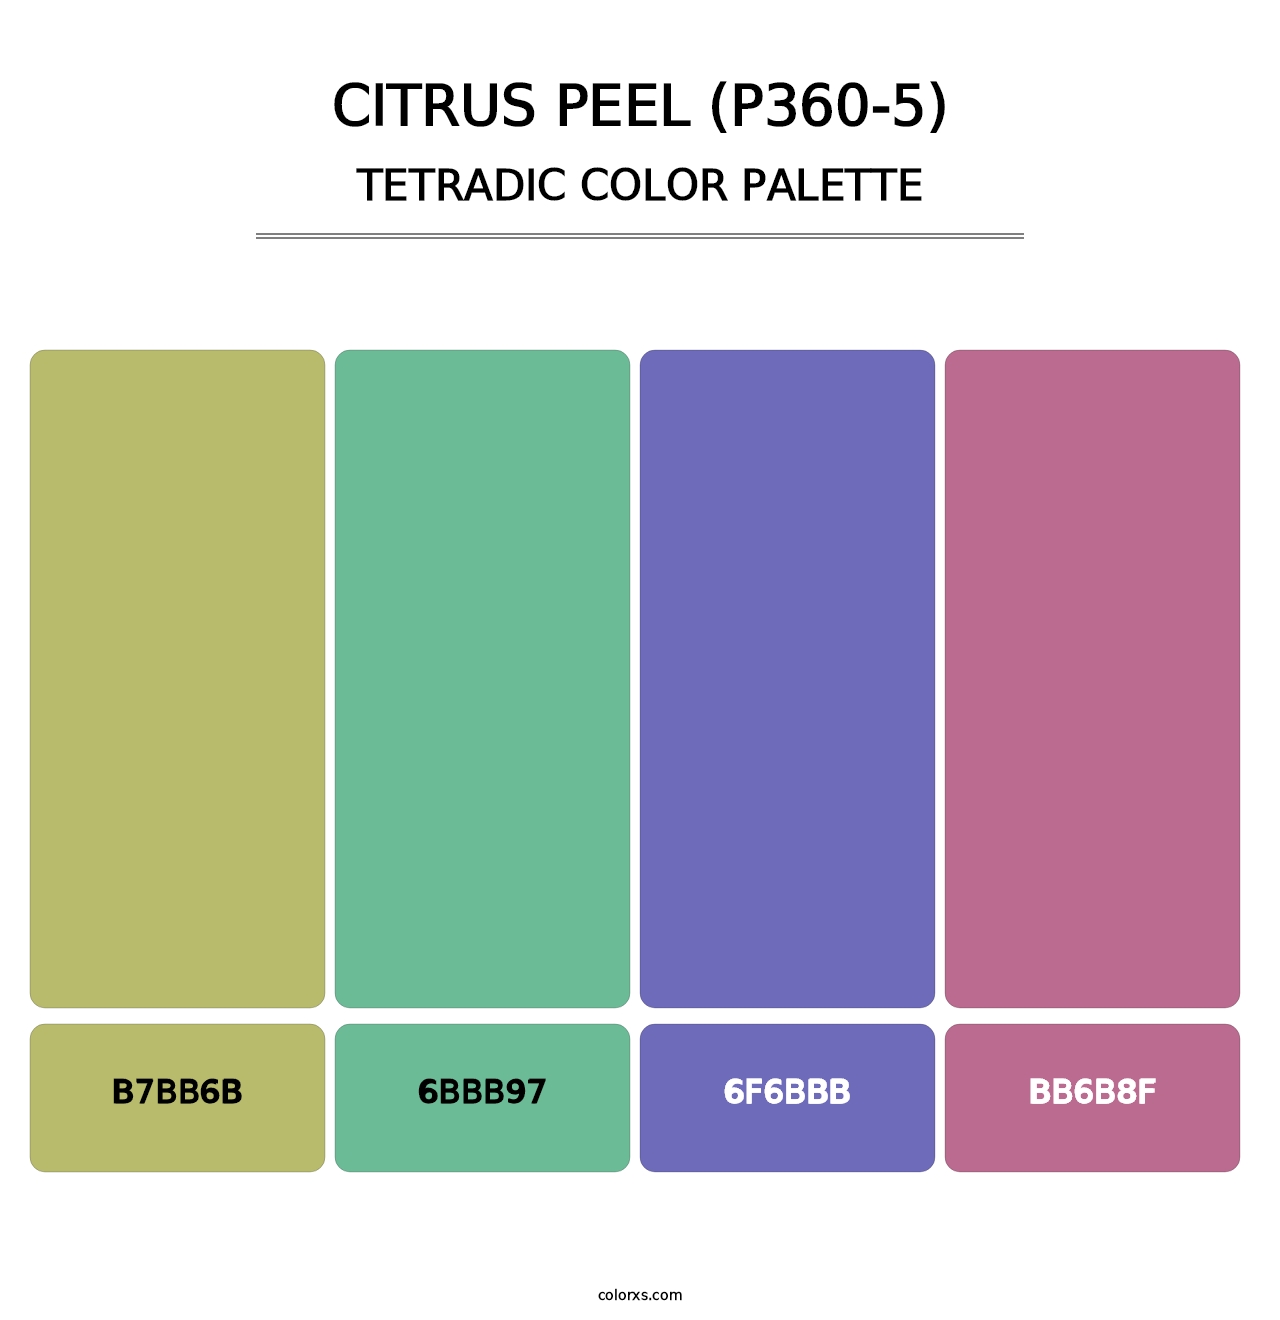 Citrus Peel (P360-5) - Tetradic Color Palette